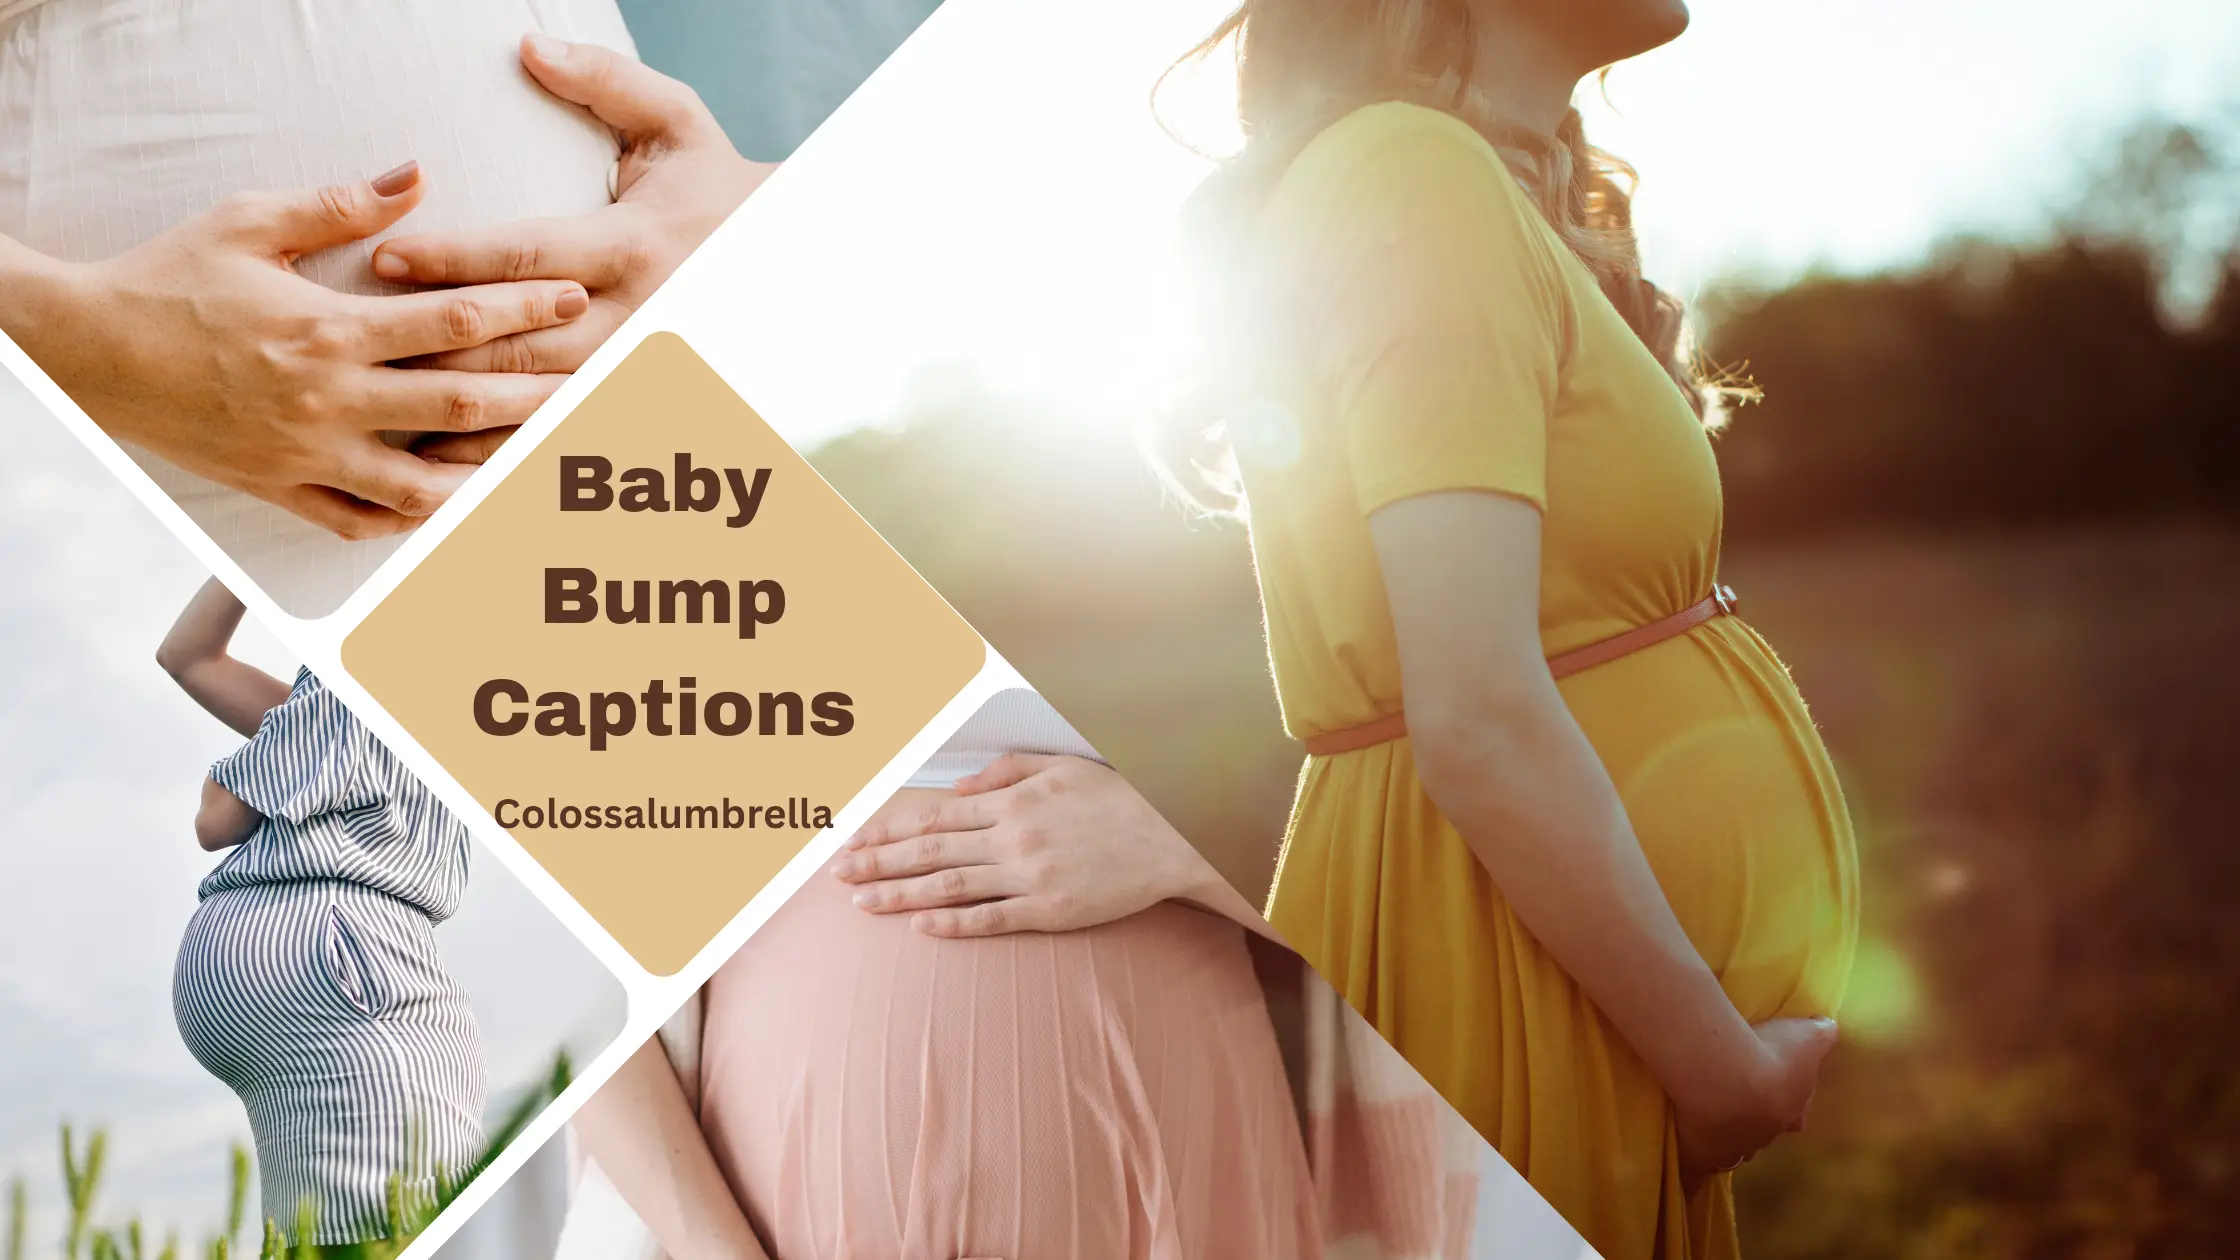 Baby Bump Captions for Social Media